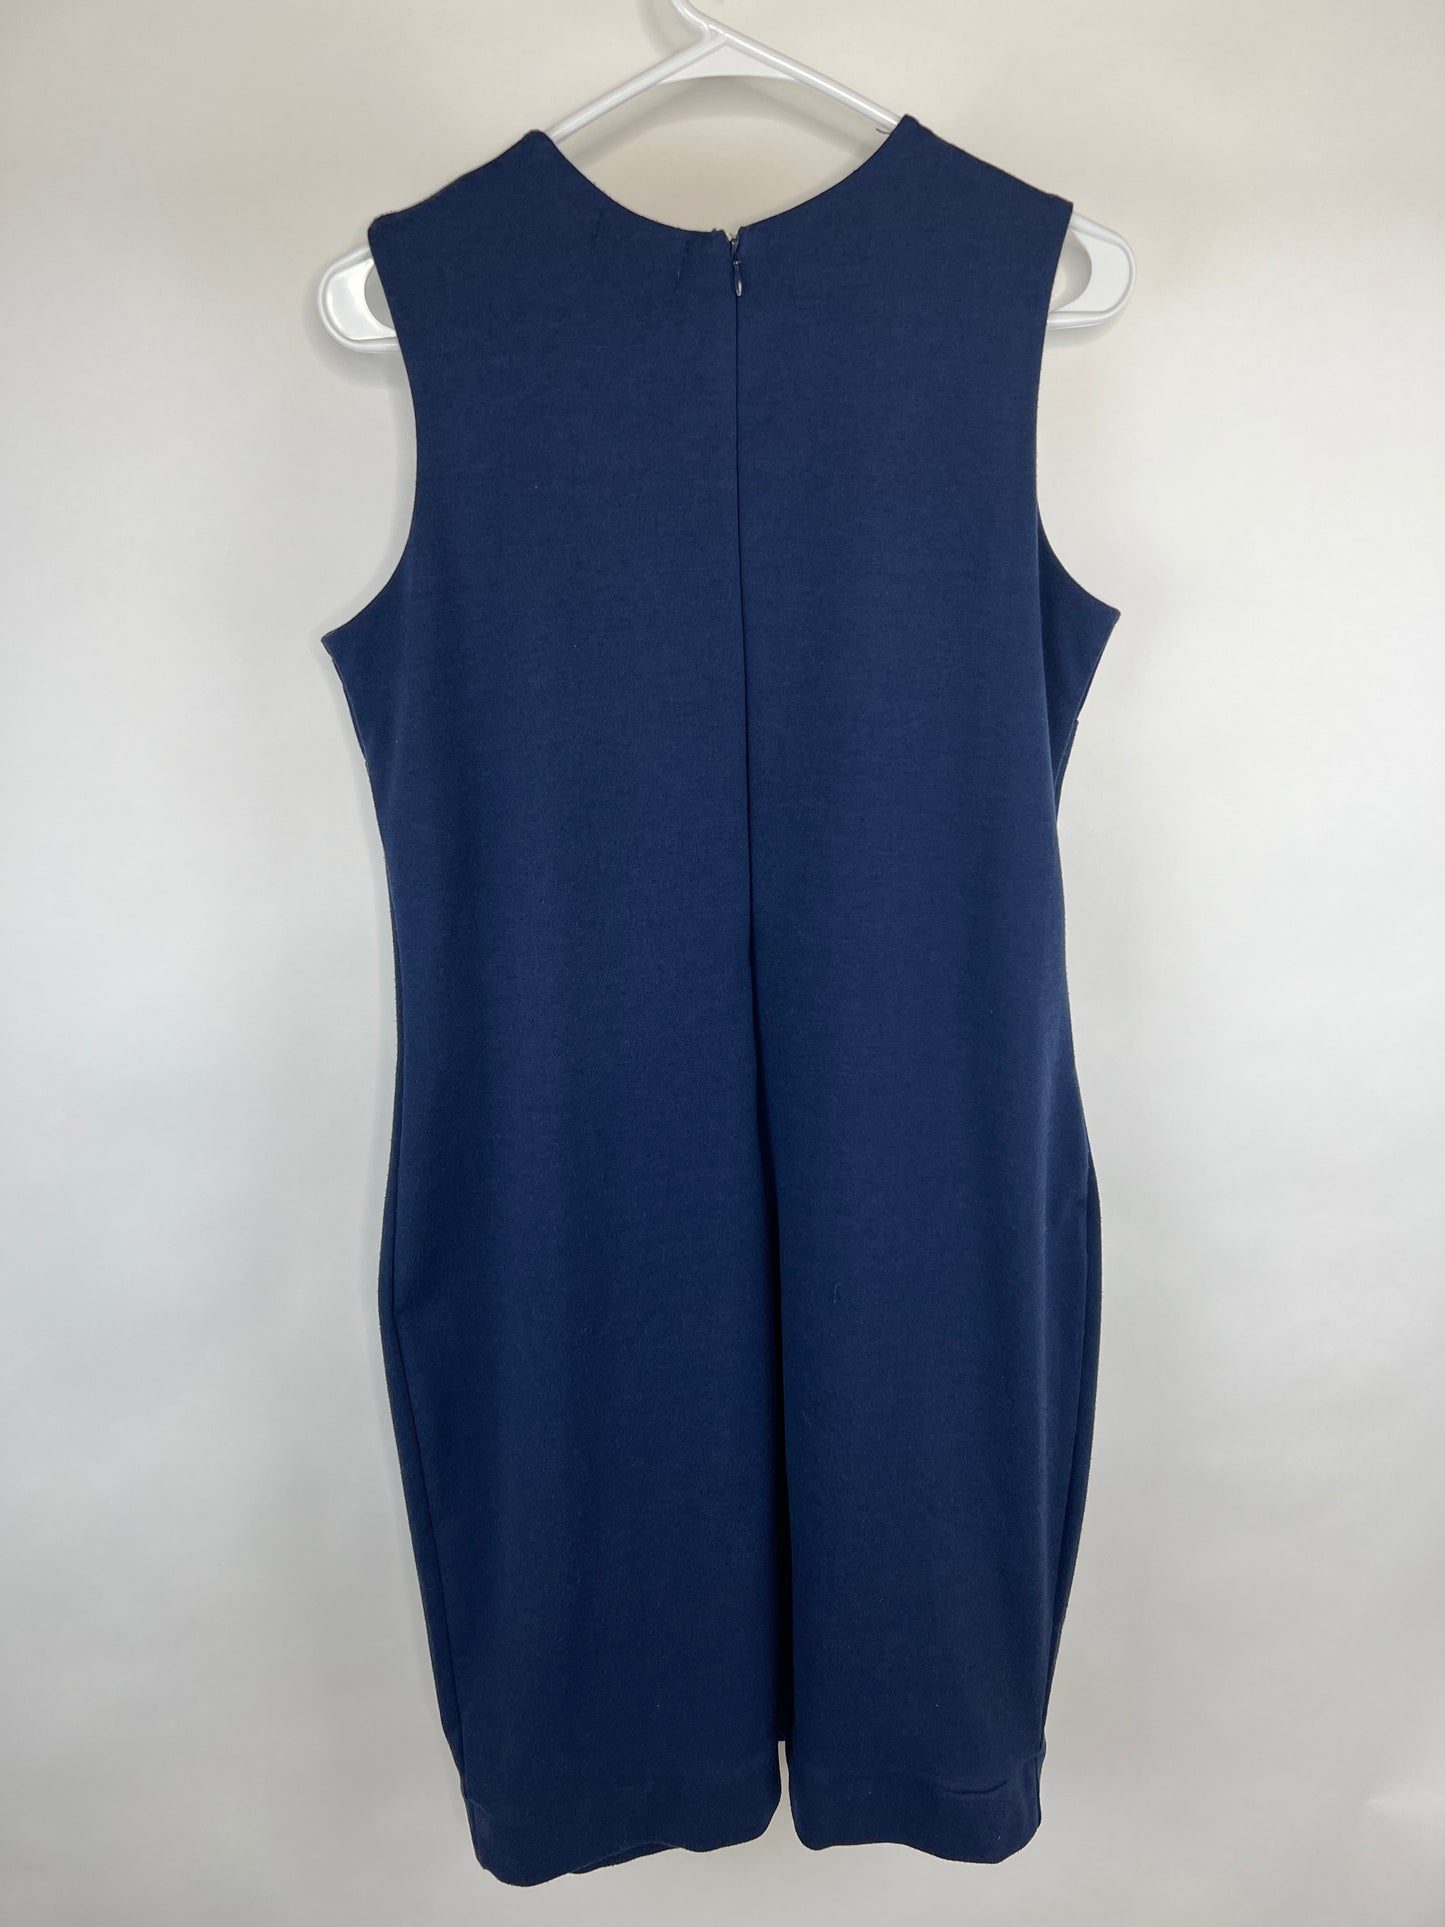 Jessica London Navy Blue Jewel Neckline Keyhole Midi Dress - L (12)